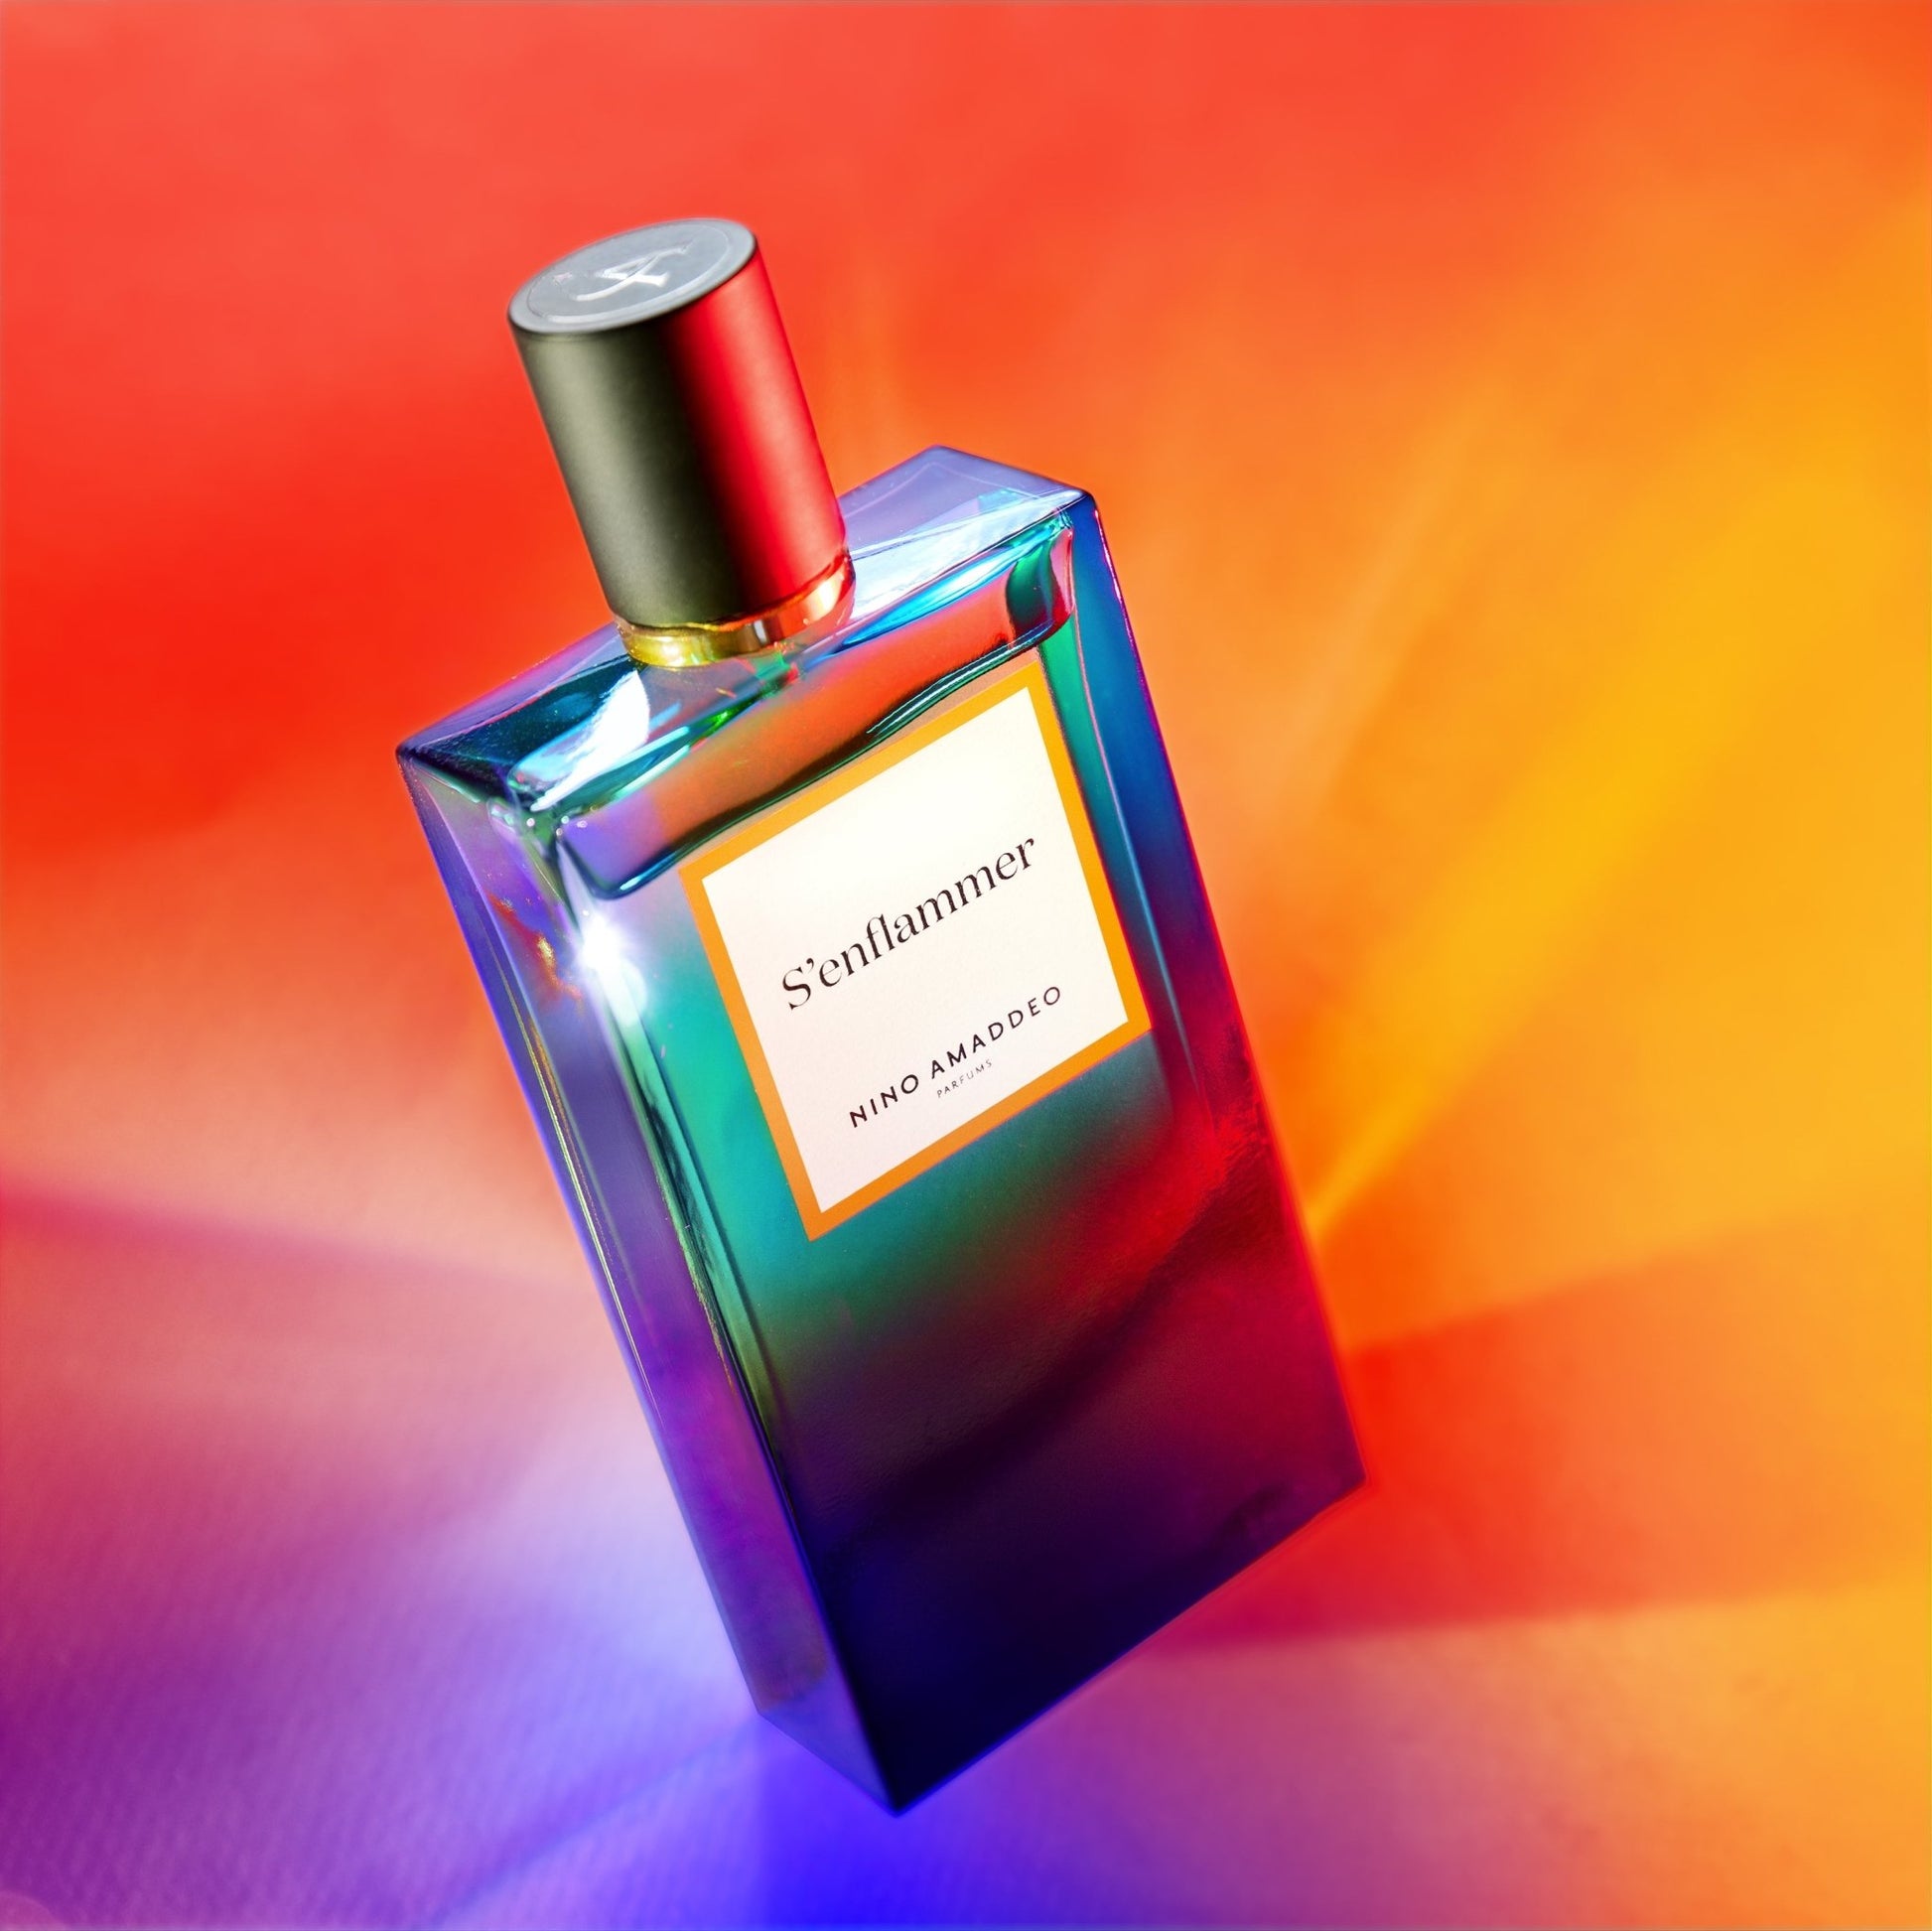 Nino Amaddeo S'enflammer Fragrances 3.4 oz/100 ml ScentRabbit